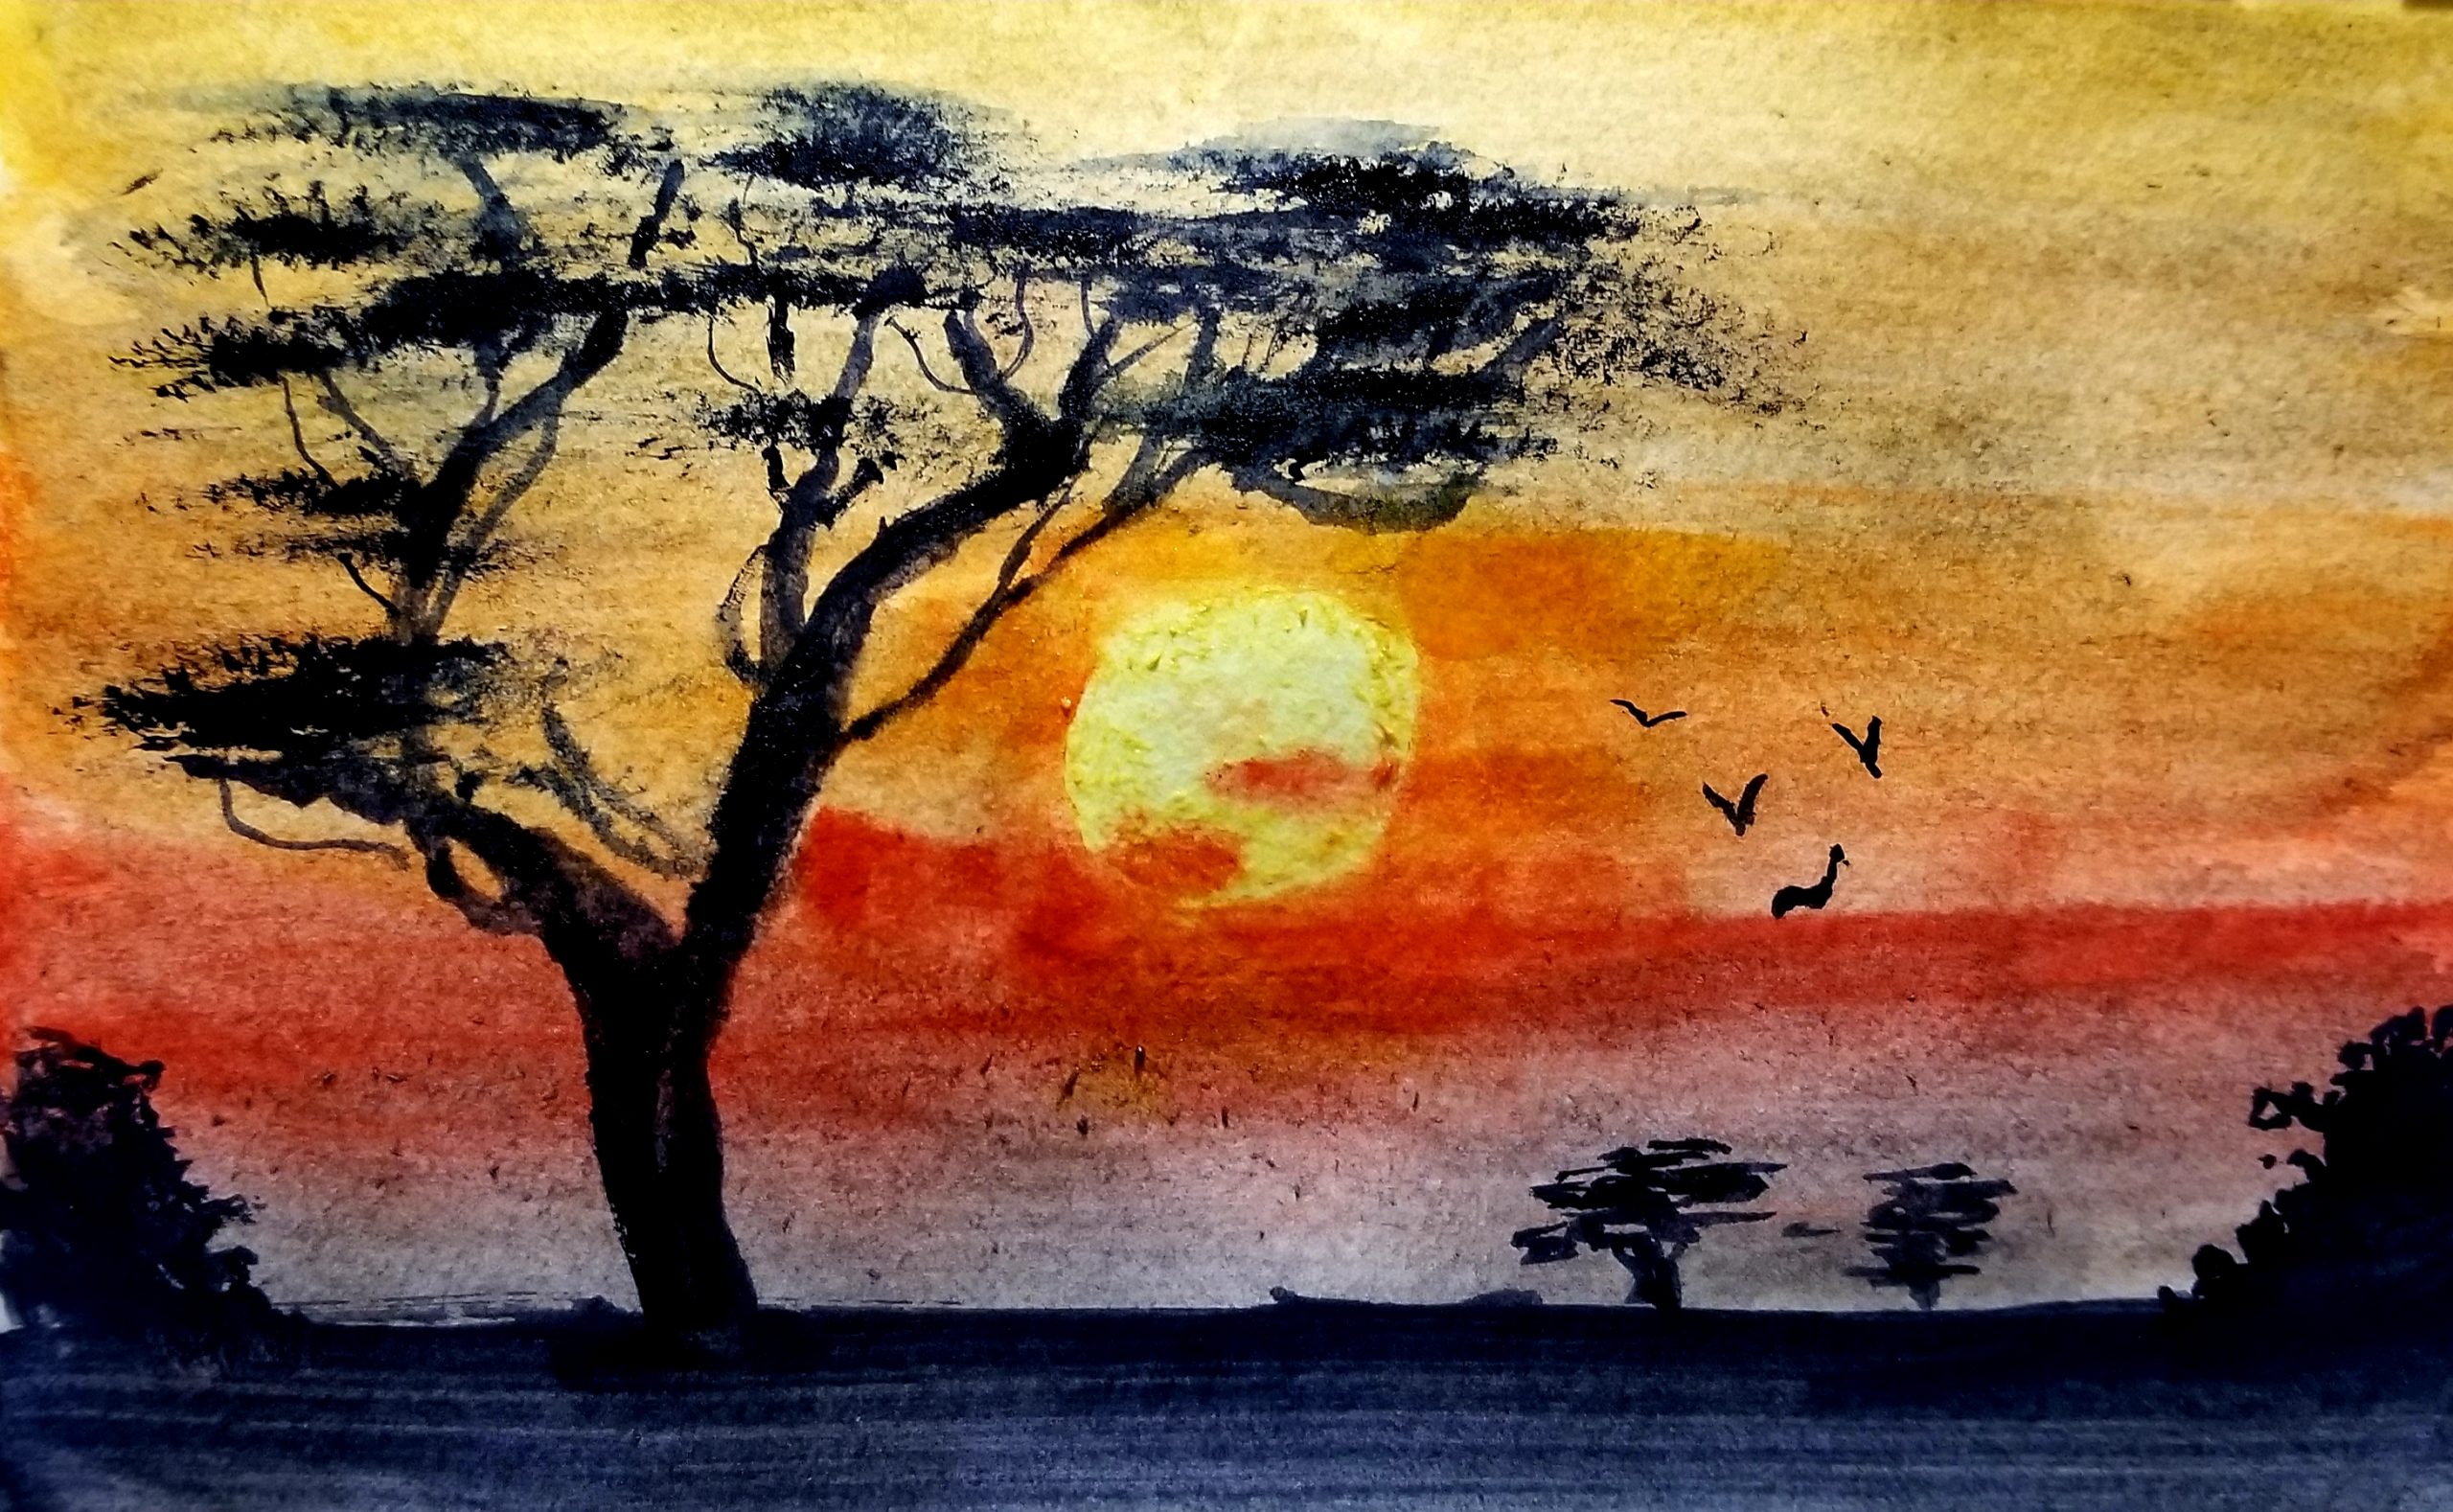 Serengeti Sunset - Butch's Junk Drawers